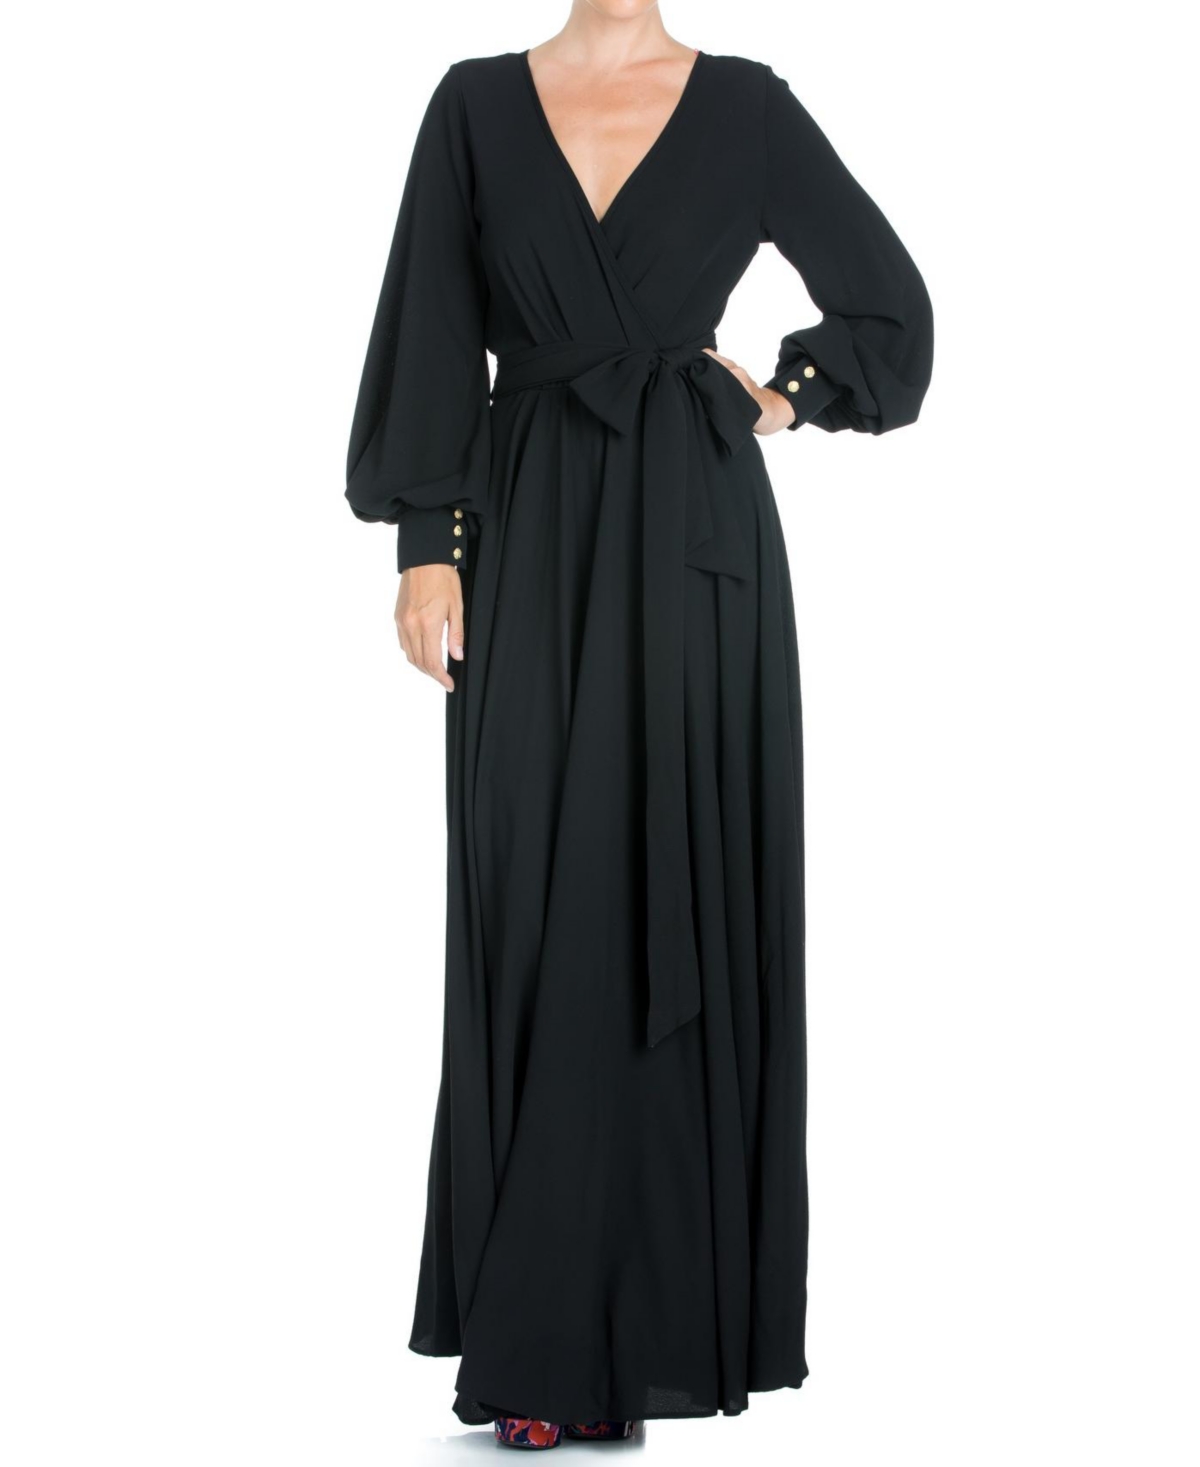 Women's Lily Pad Maxi Dress - Orchid black